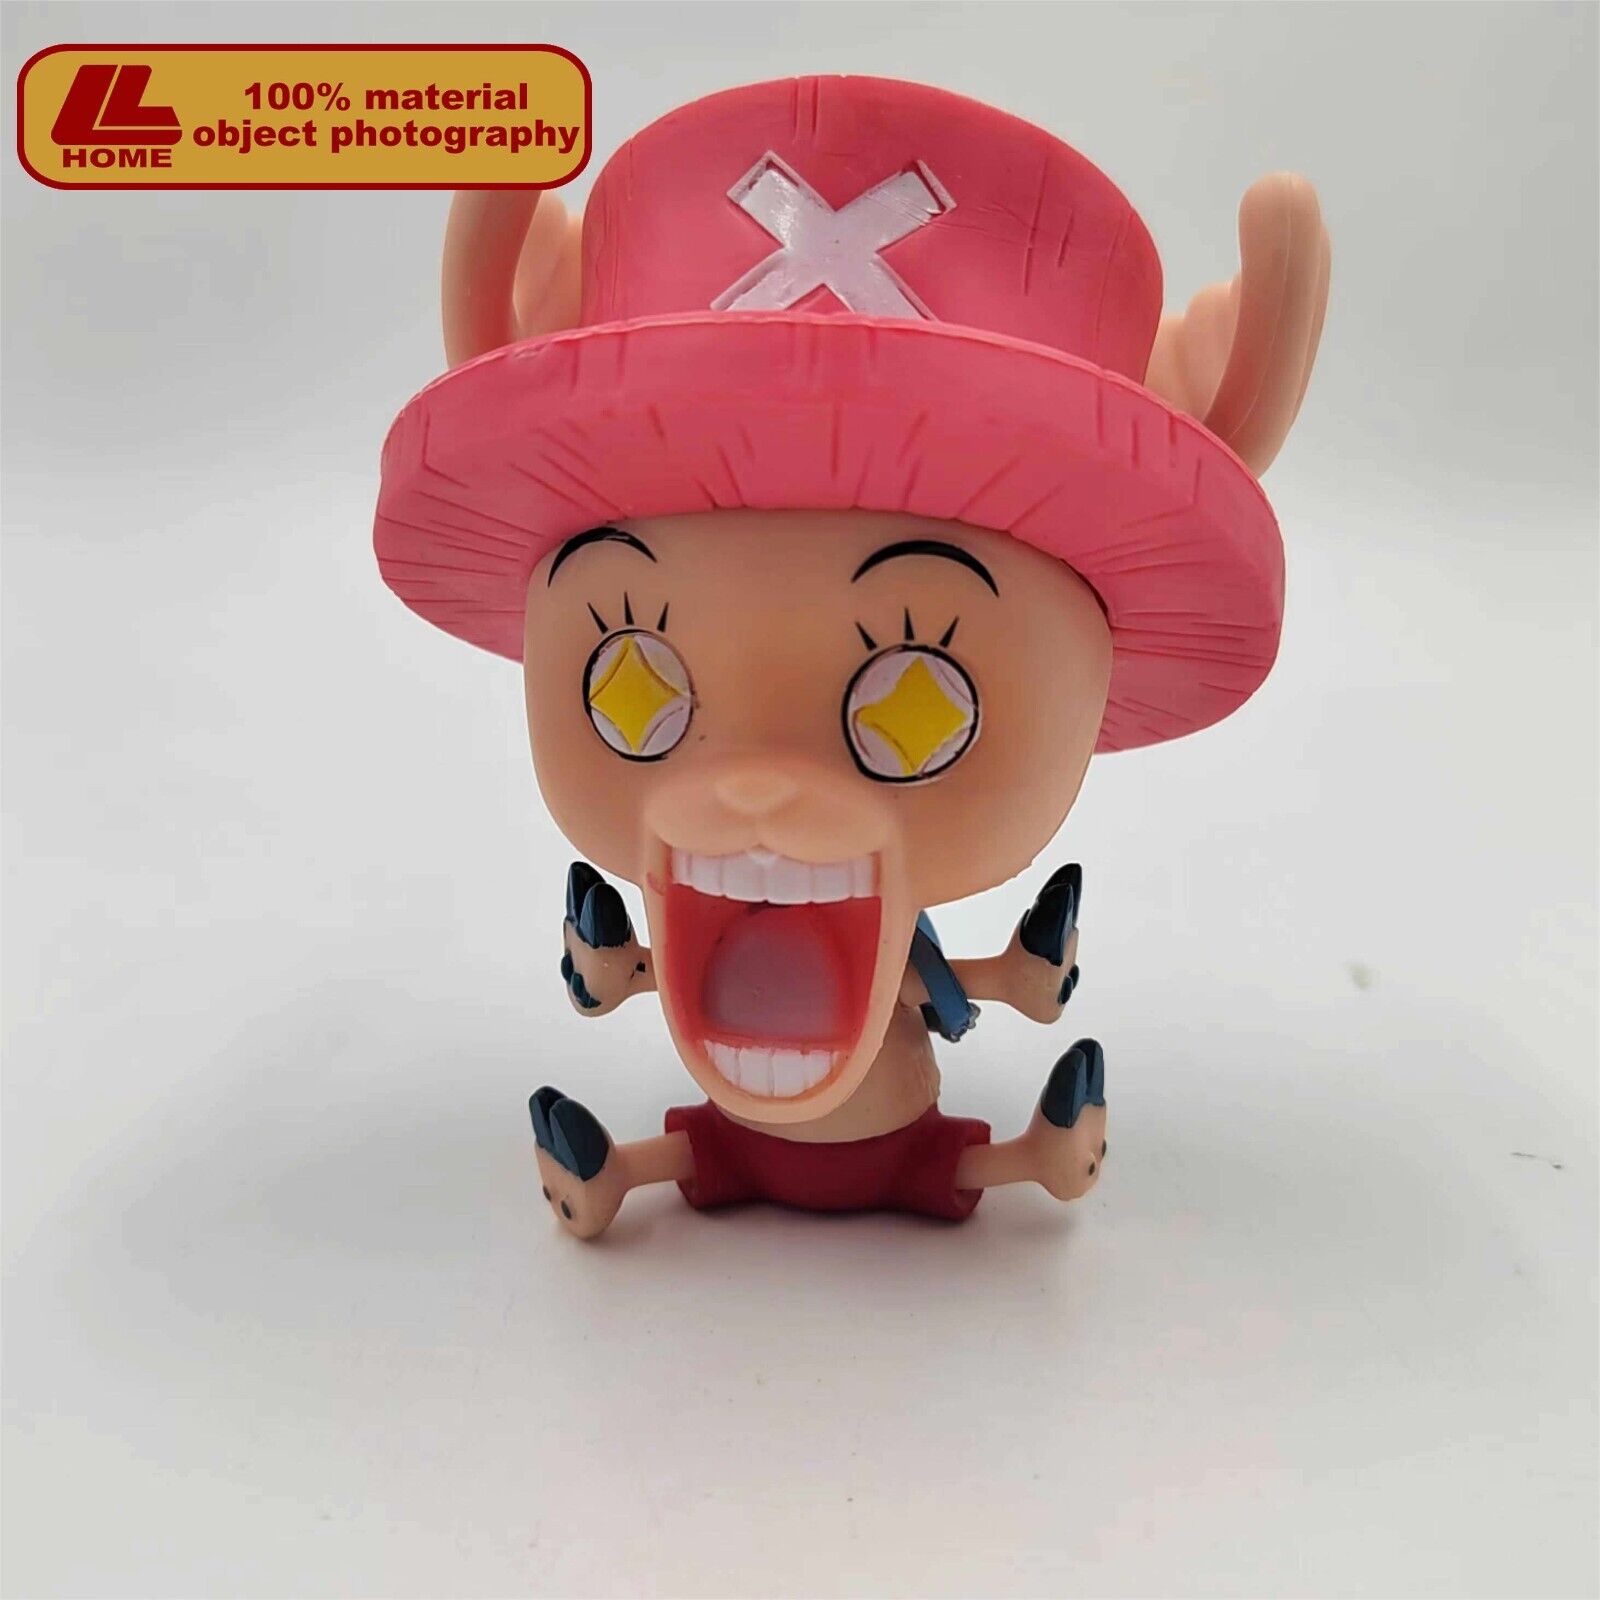 Anime OP Tony Tony Chopper Big Head Cute PVC Figures Action Toy Gift